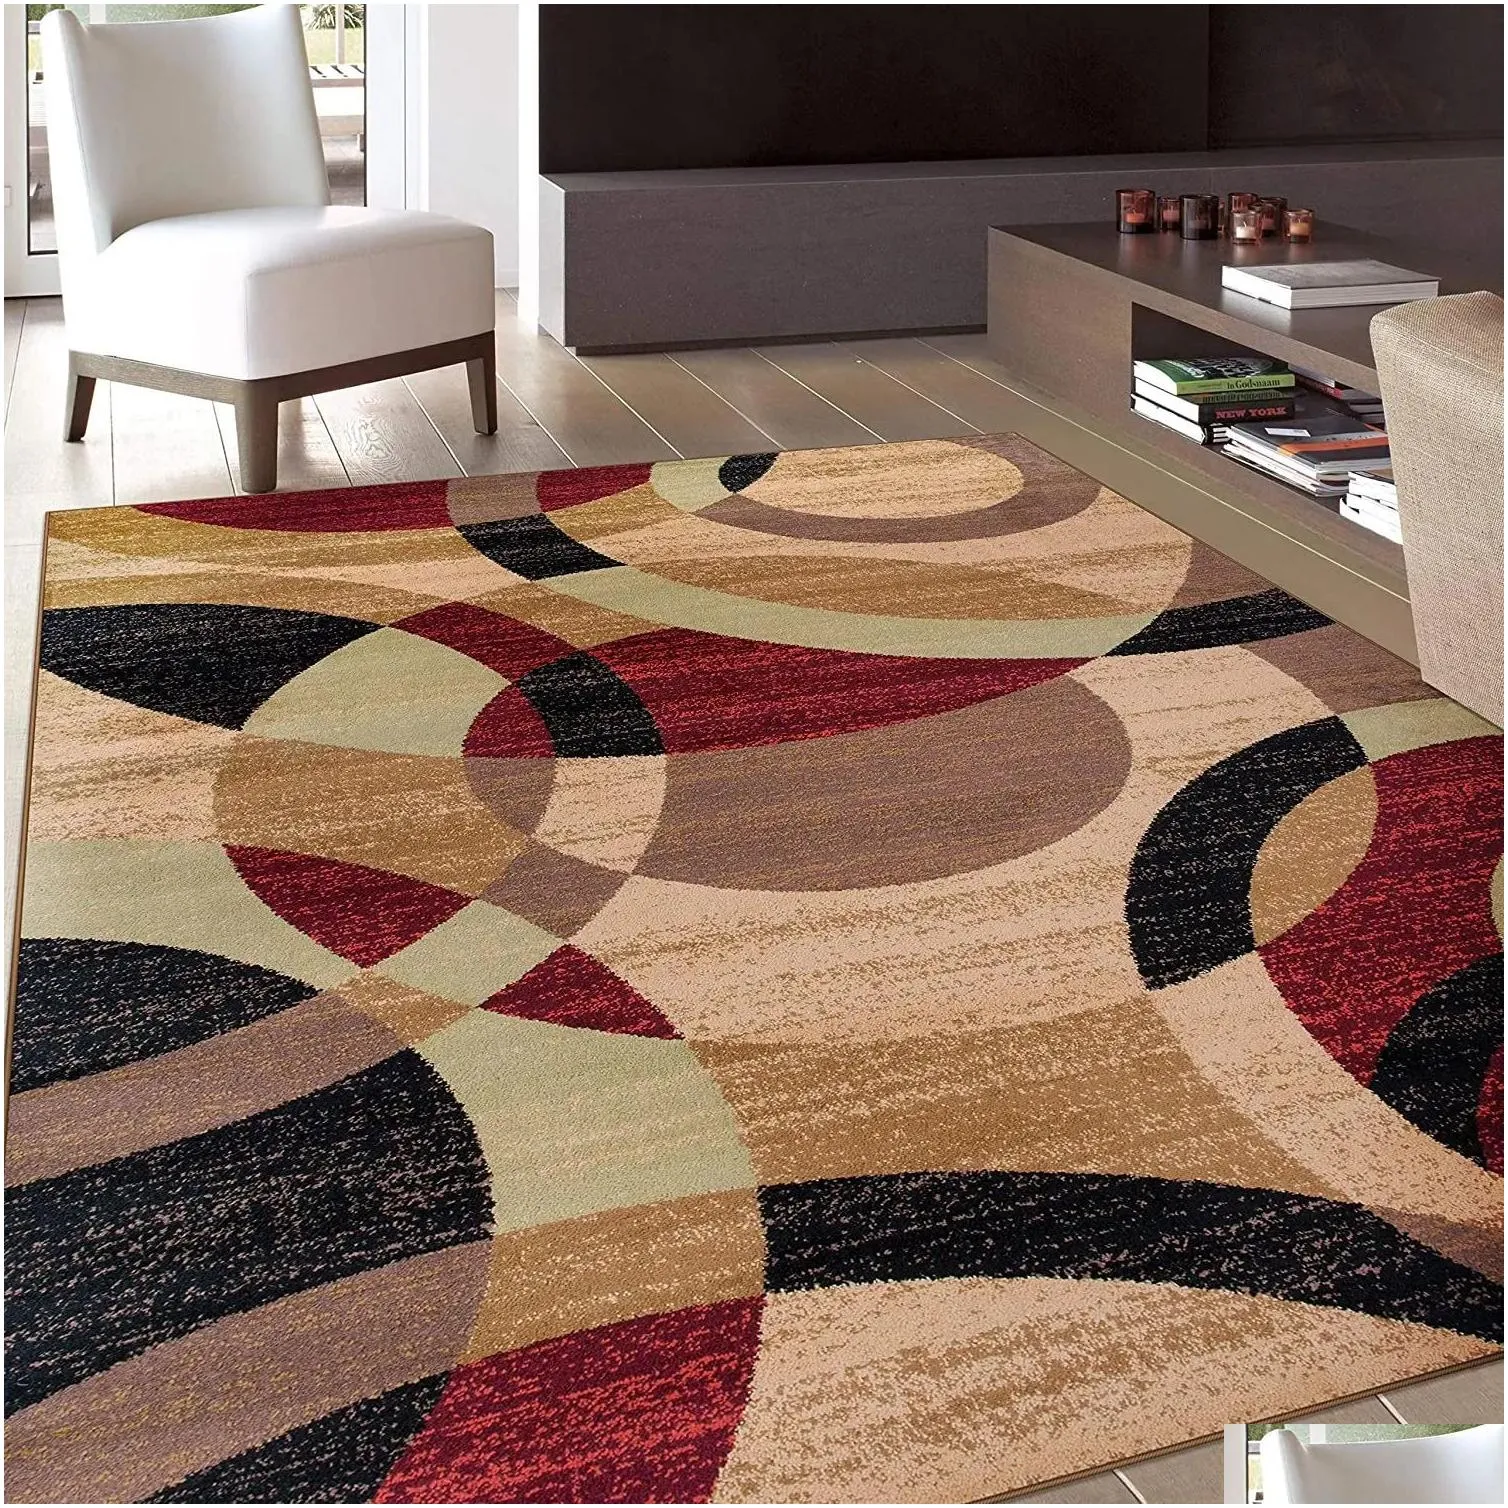 carpet nordic geometric carpet for living room modern luxury decor sofa table large area rugs bathroom mat alfombra para cocina tapis